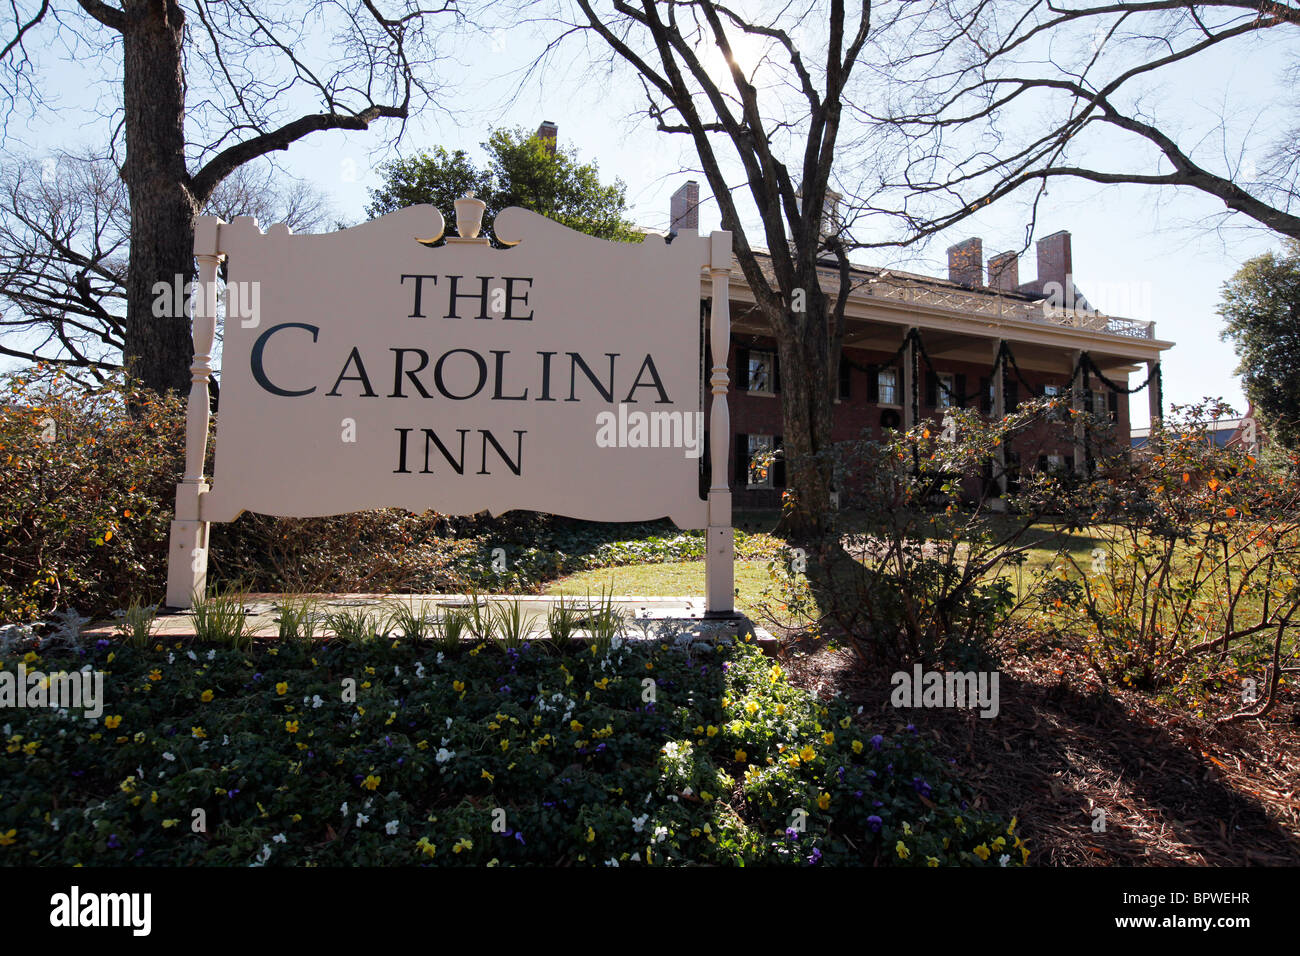 The Carolina Inn on the campus of the University of North Carolina, Chapel Hill on December 29, 2010. Stock Photo